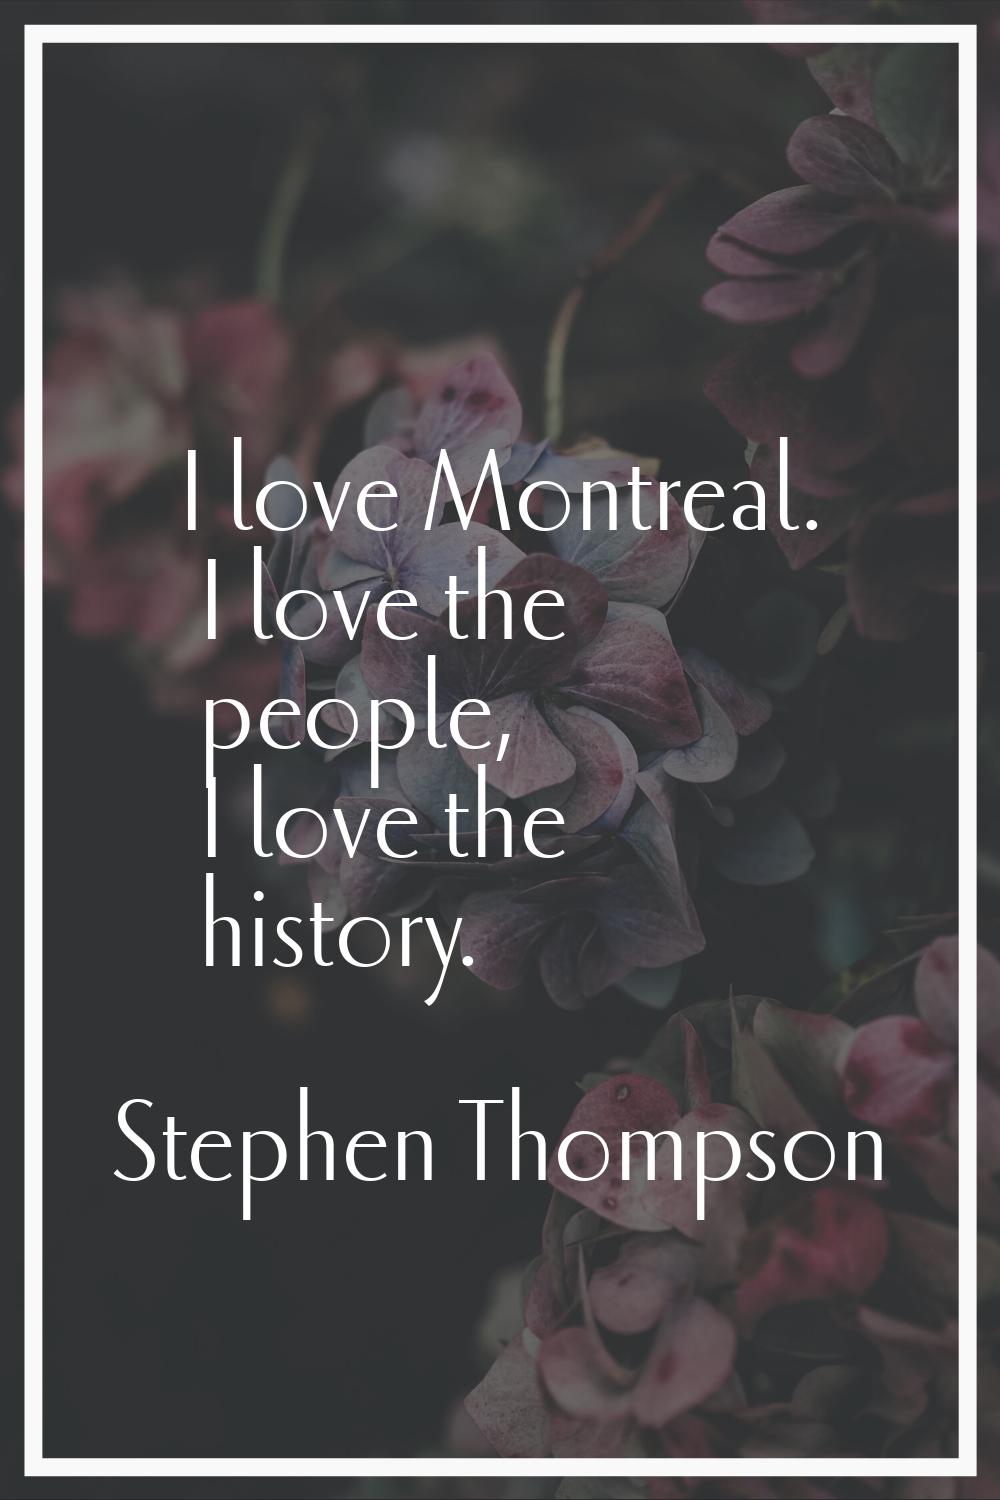 I love Montreal. I love the people, I love the history.